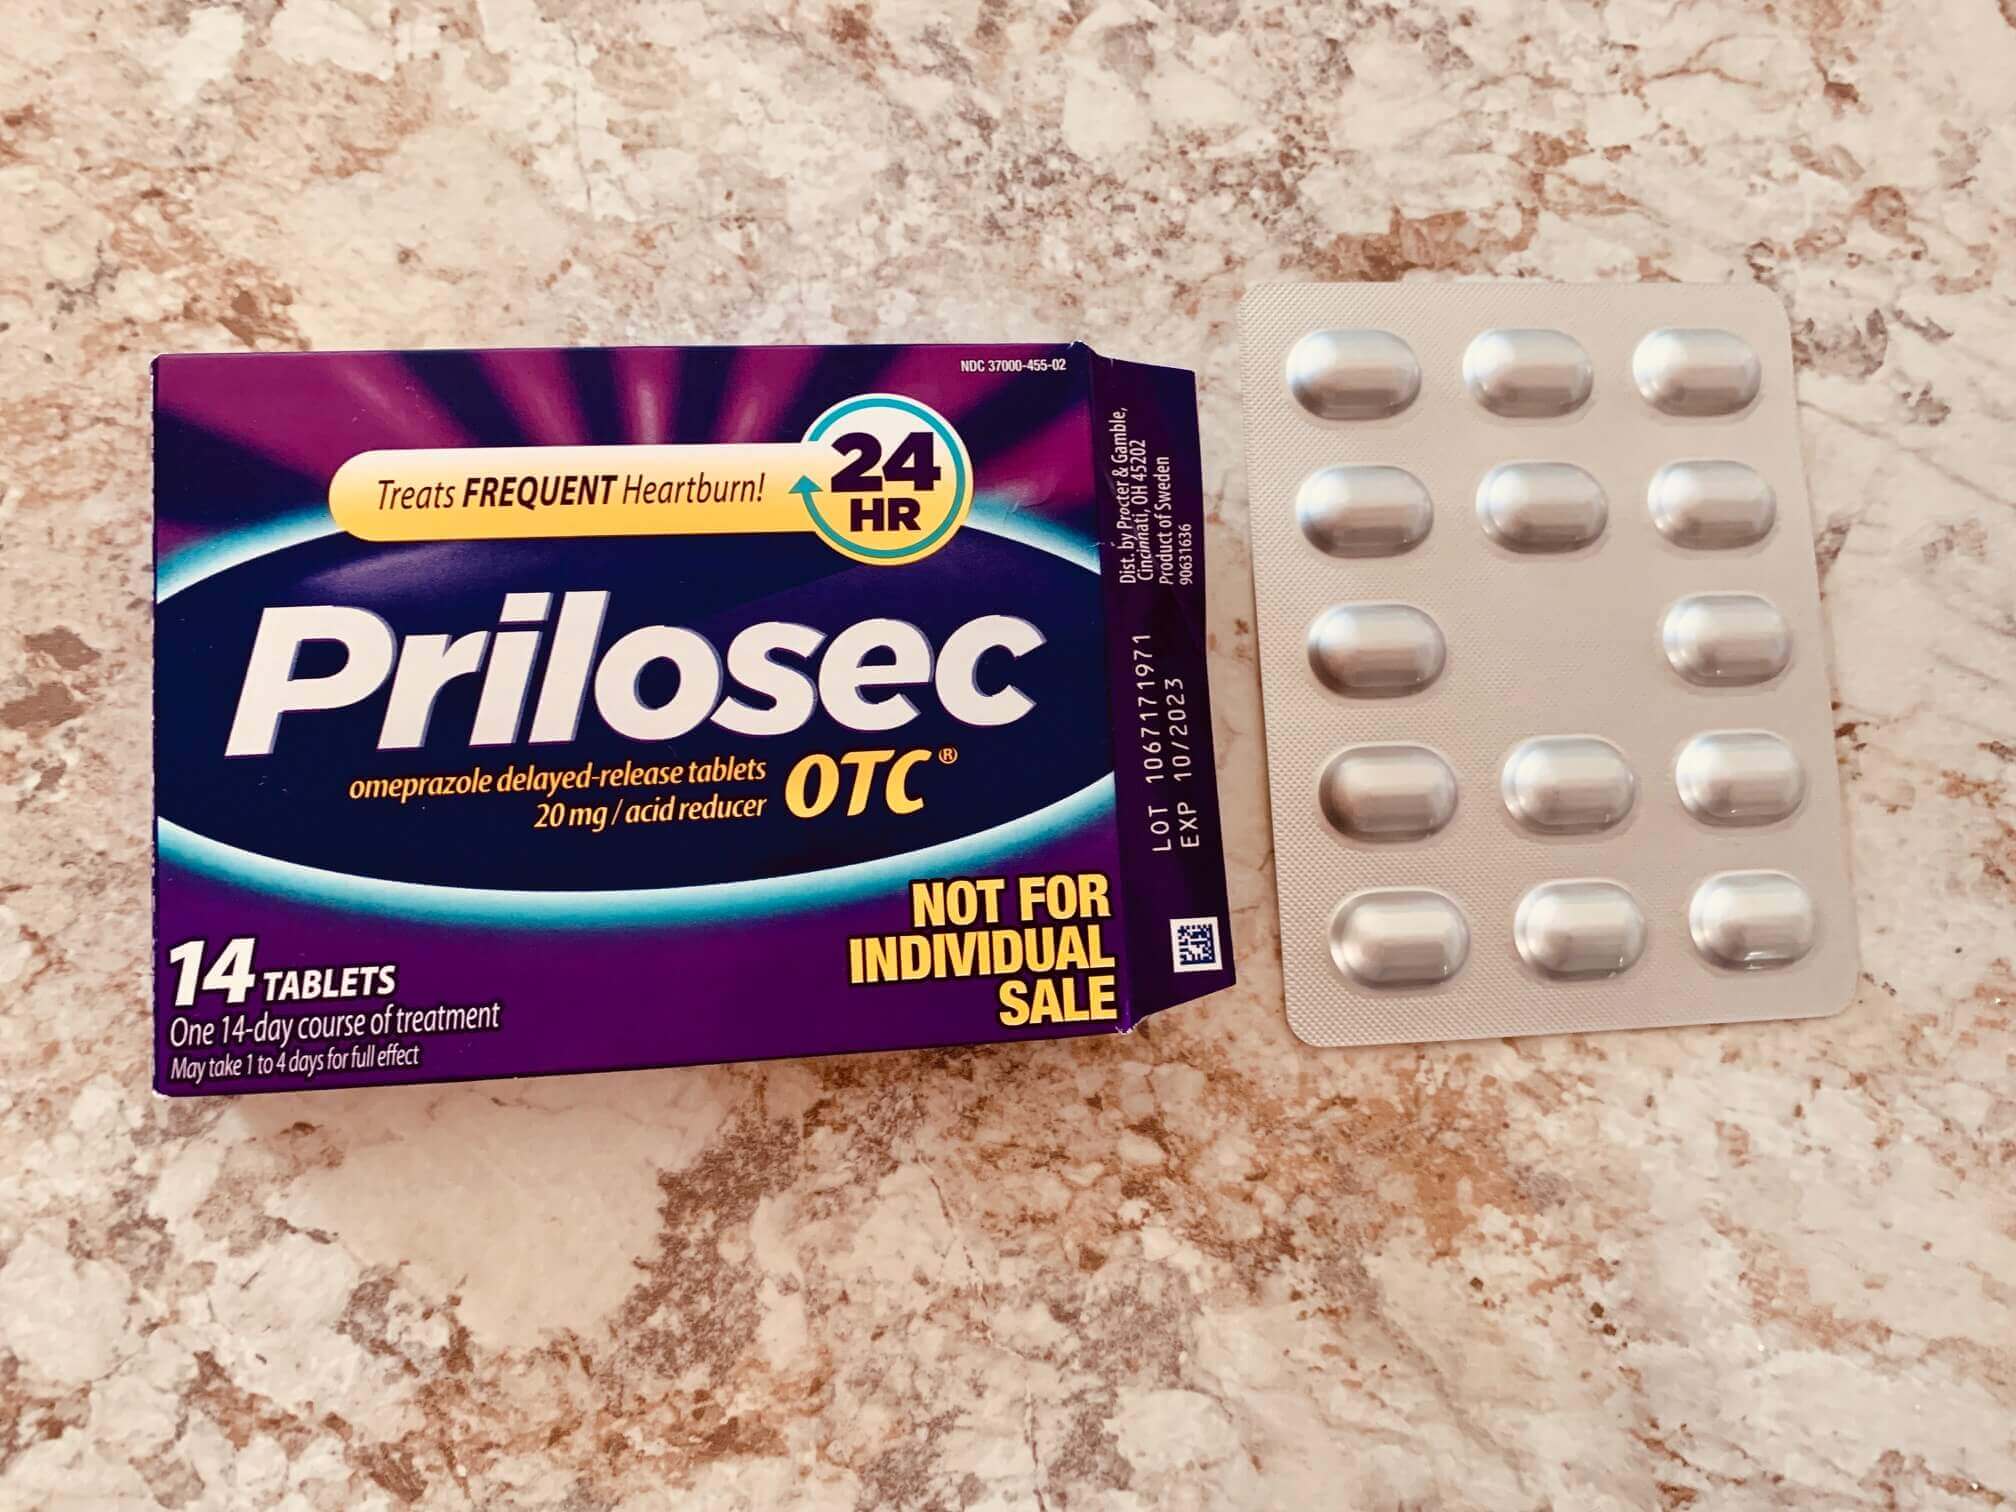 Prilosec-약박스와-은색-알약-캡슐이-보이는-모습